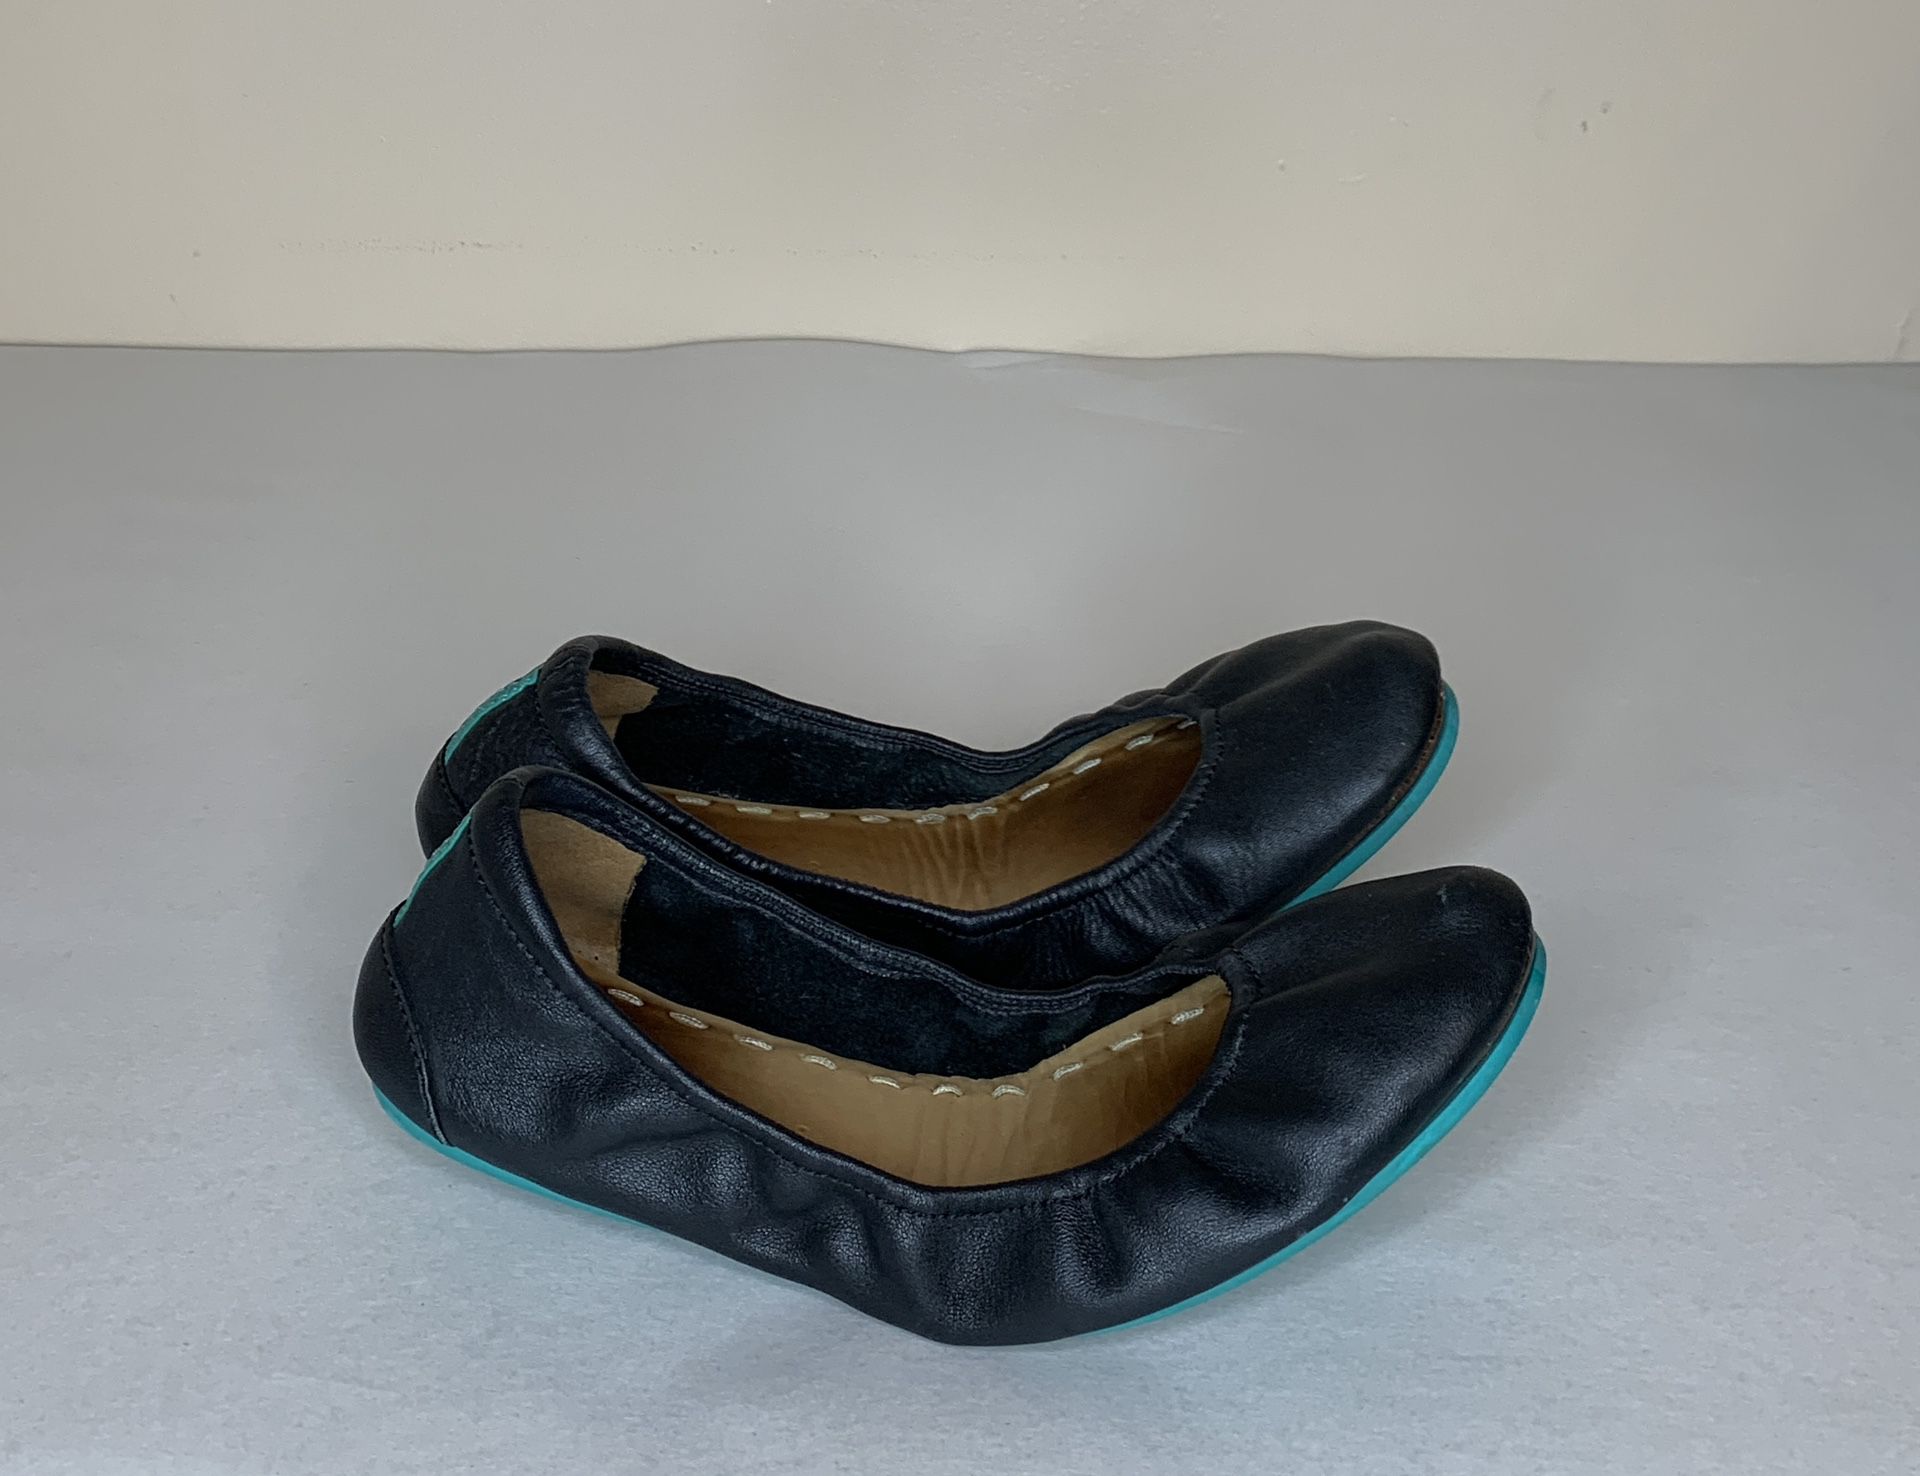 Tieks by Gavrieli Matte Black Leather Flats Size 8 Ballet Shoes Foldable